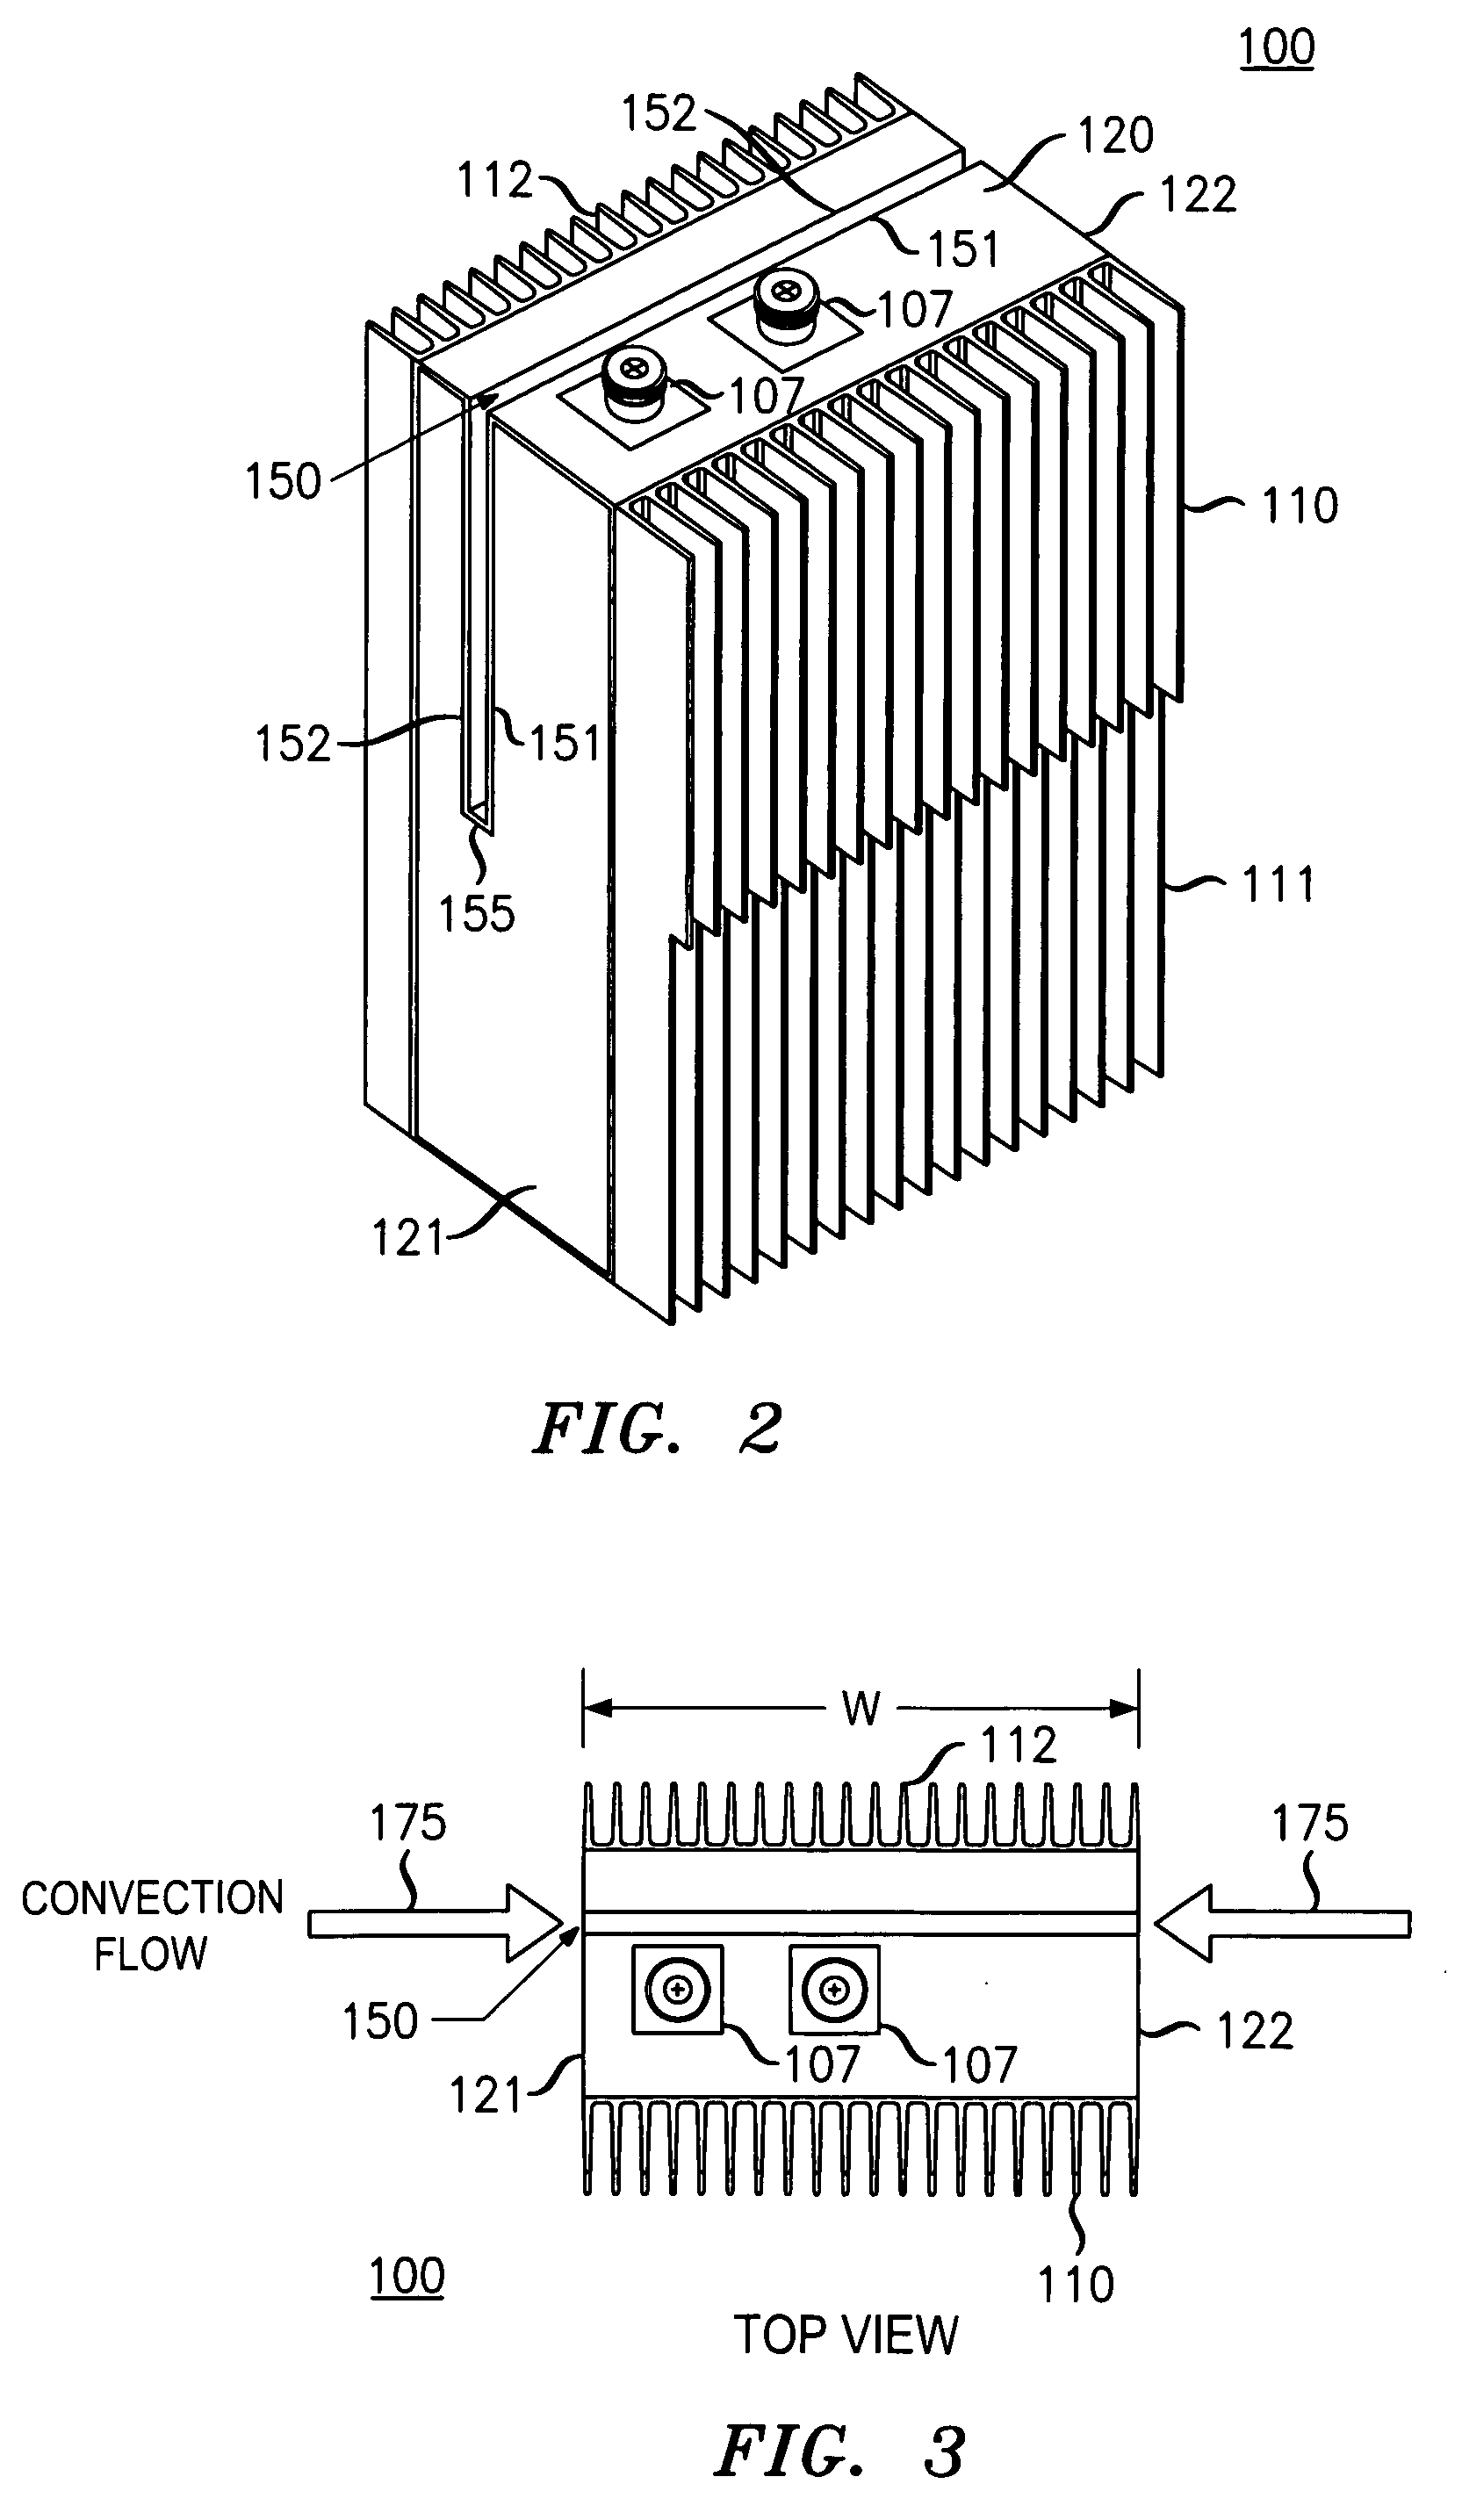 Cooling arrangement for an equipment assembly